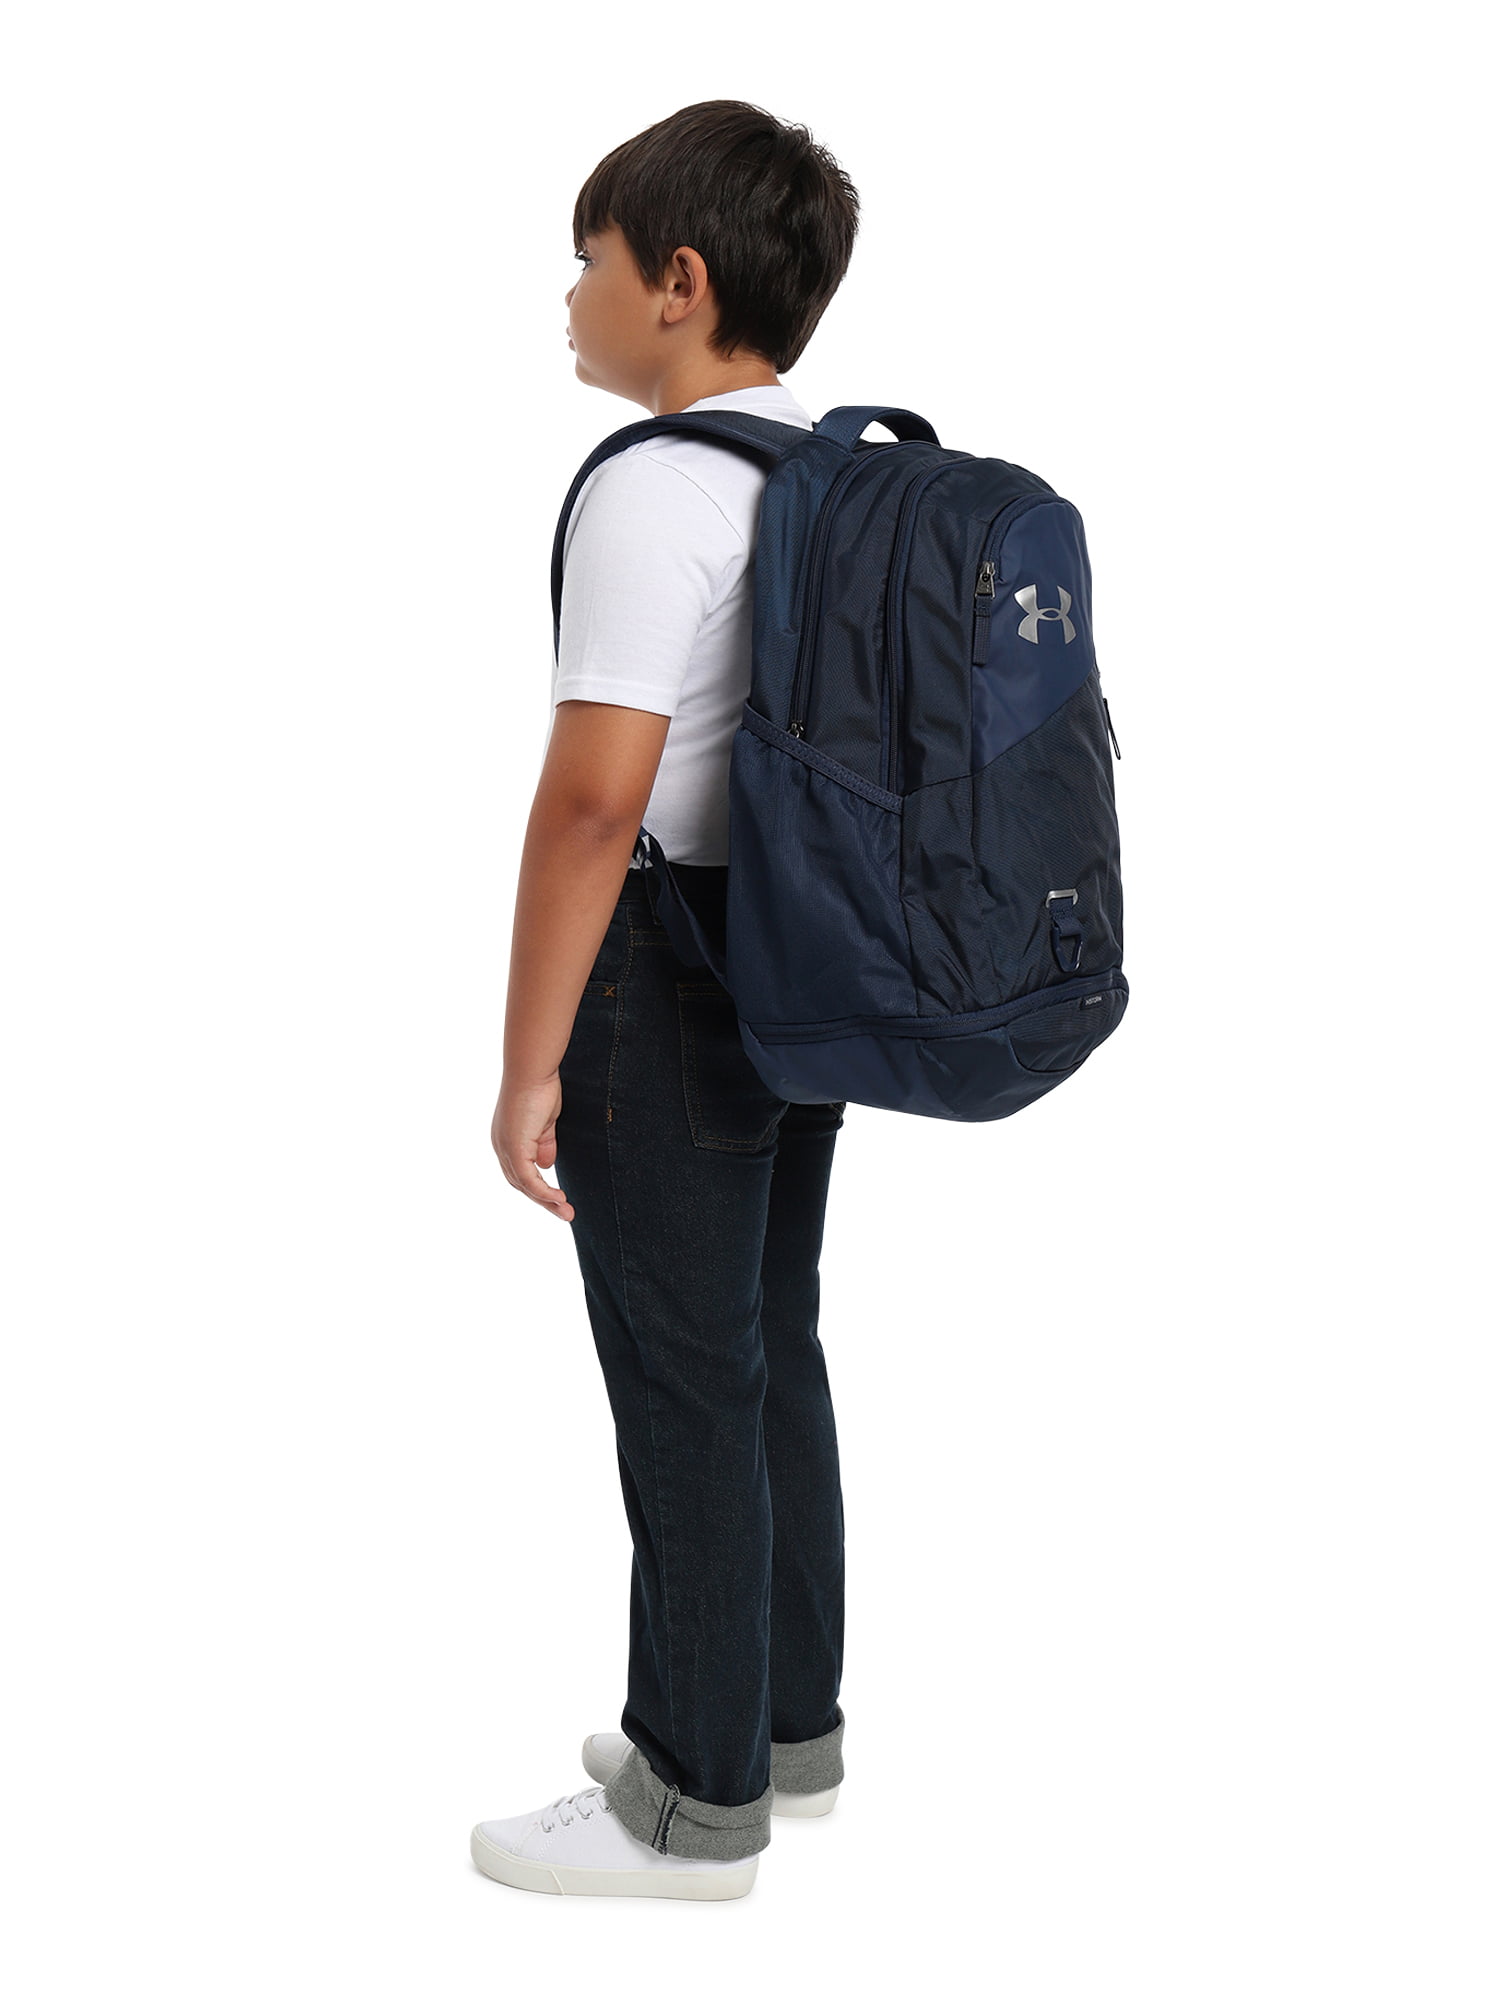 22FW Black Red Silver Backpack School Bag Rucksack Men Backbag